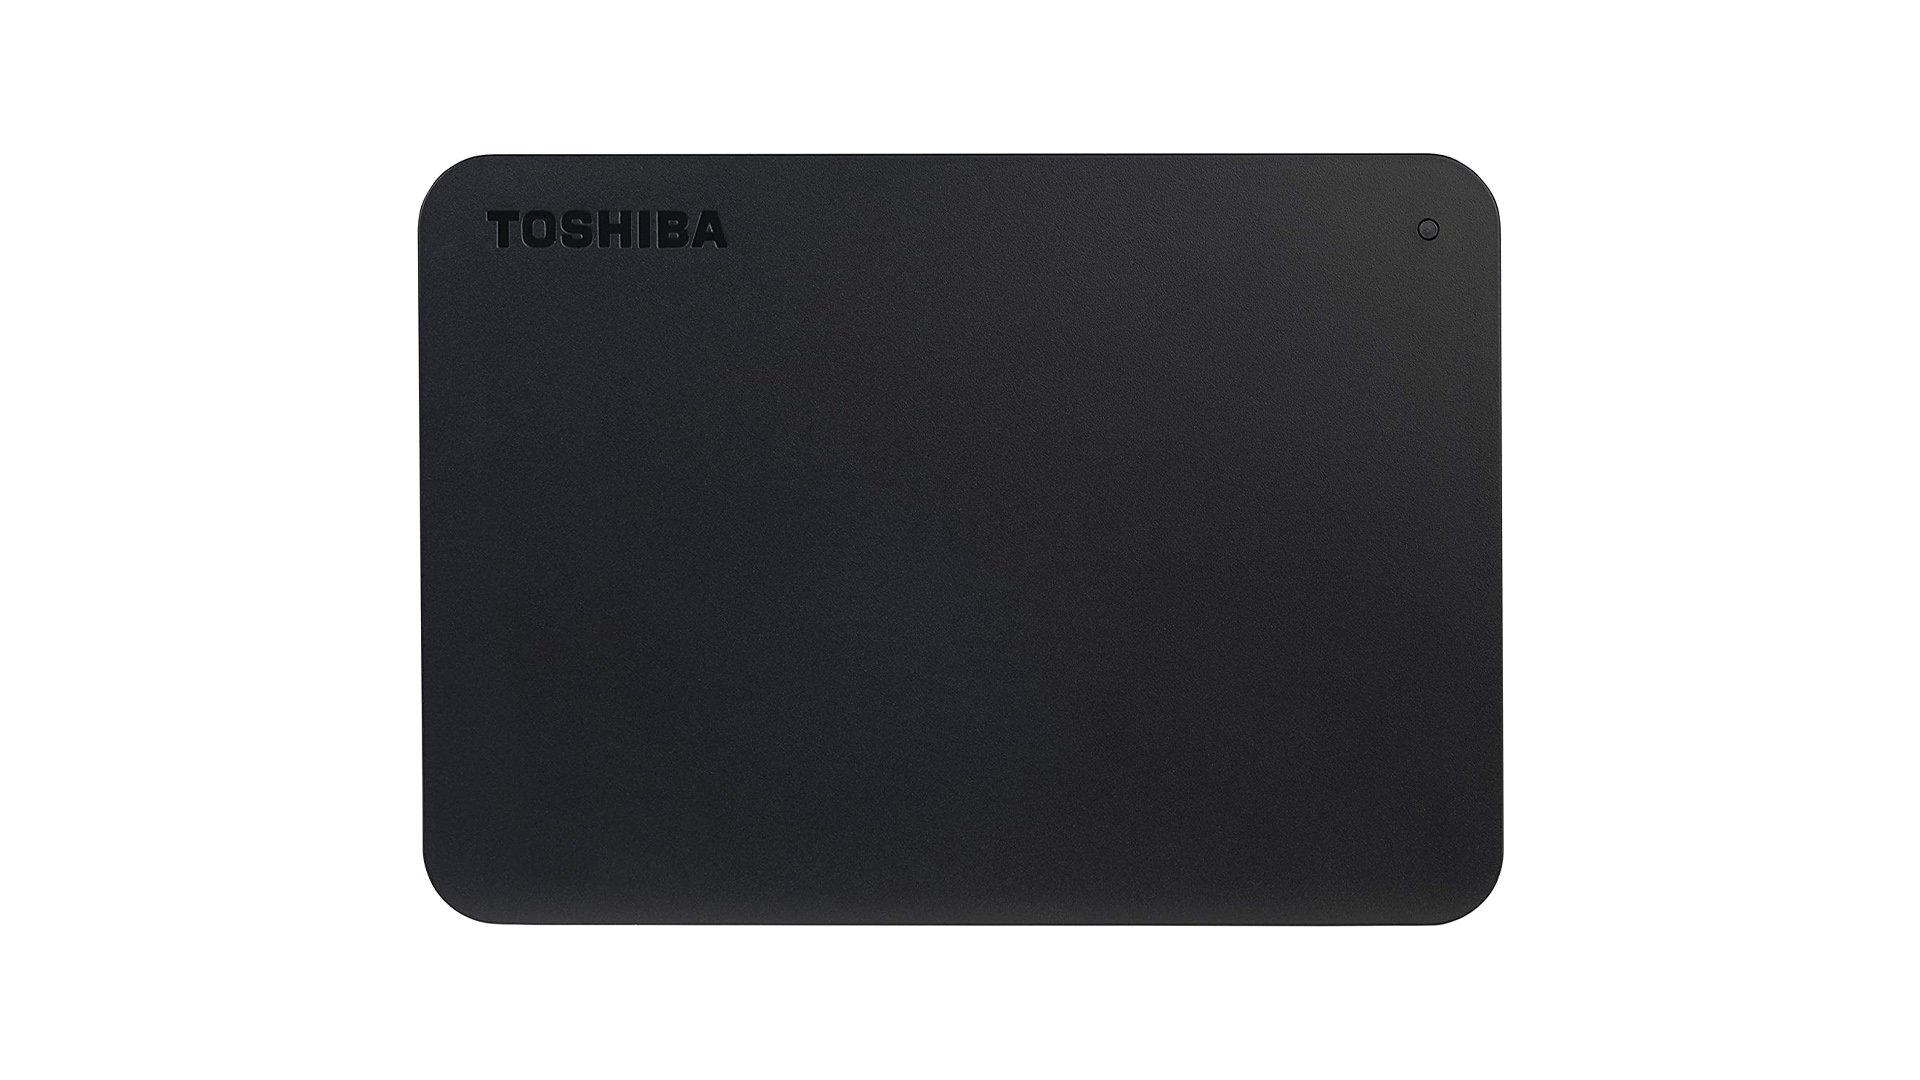 Toshiba Canvio Basics 1TB External Drive